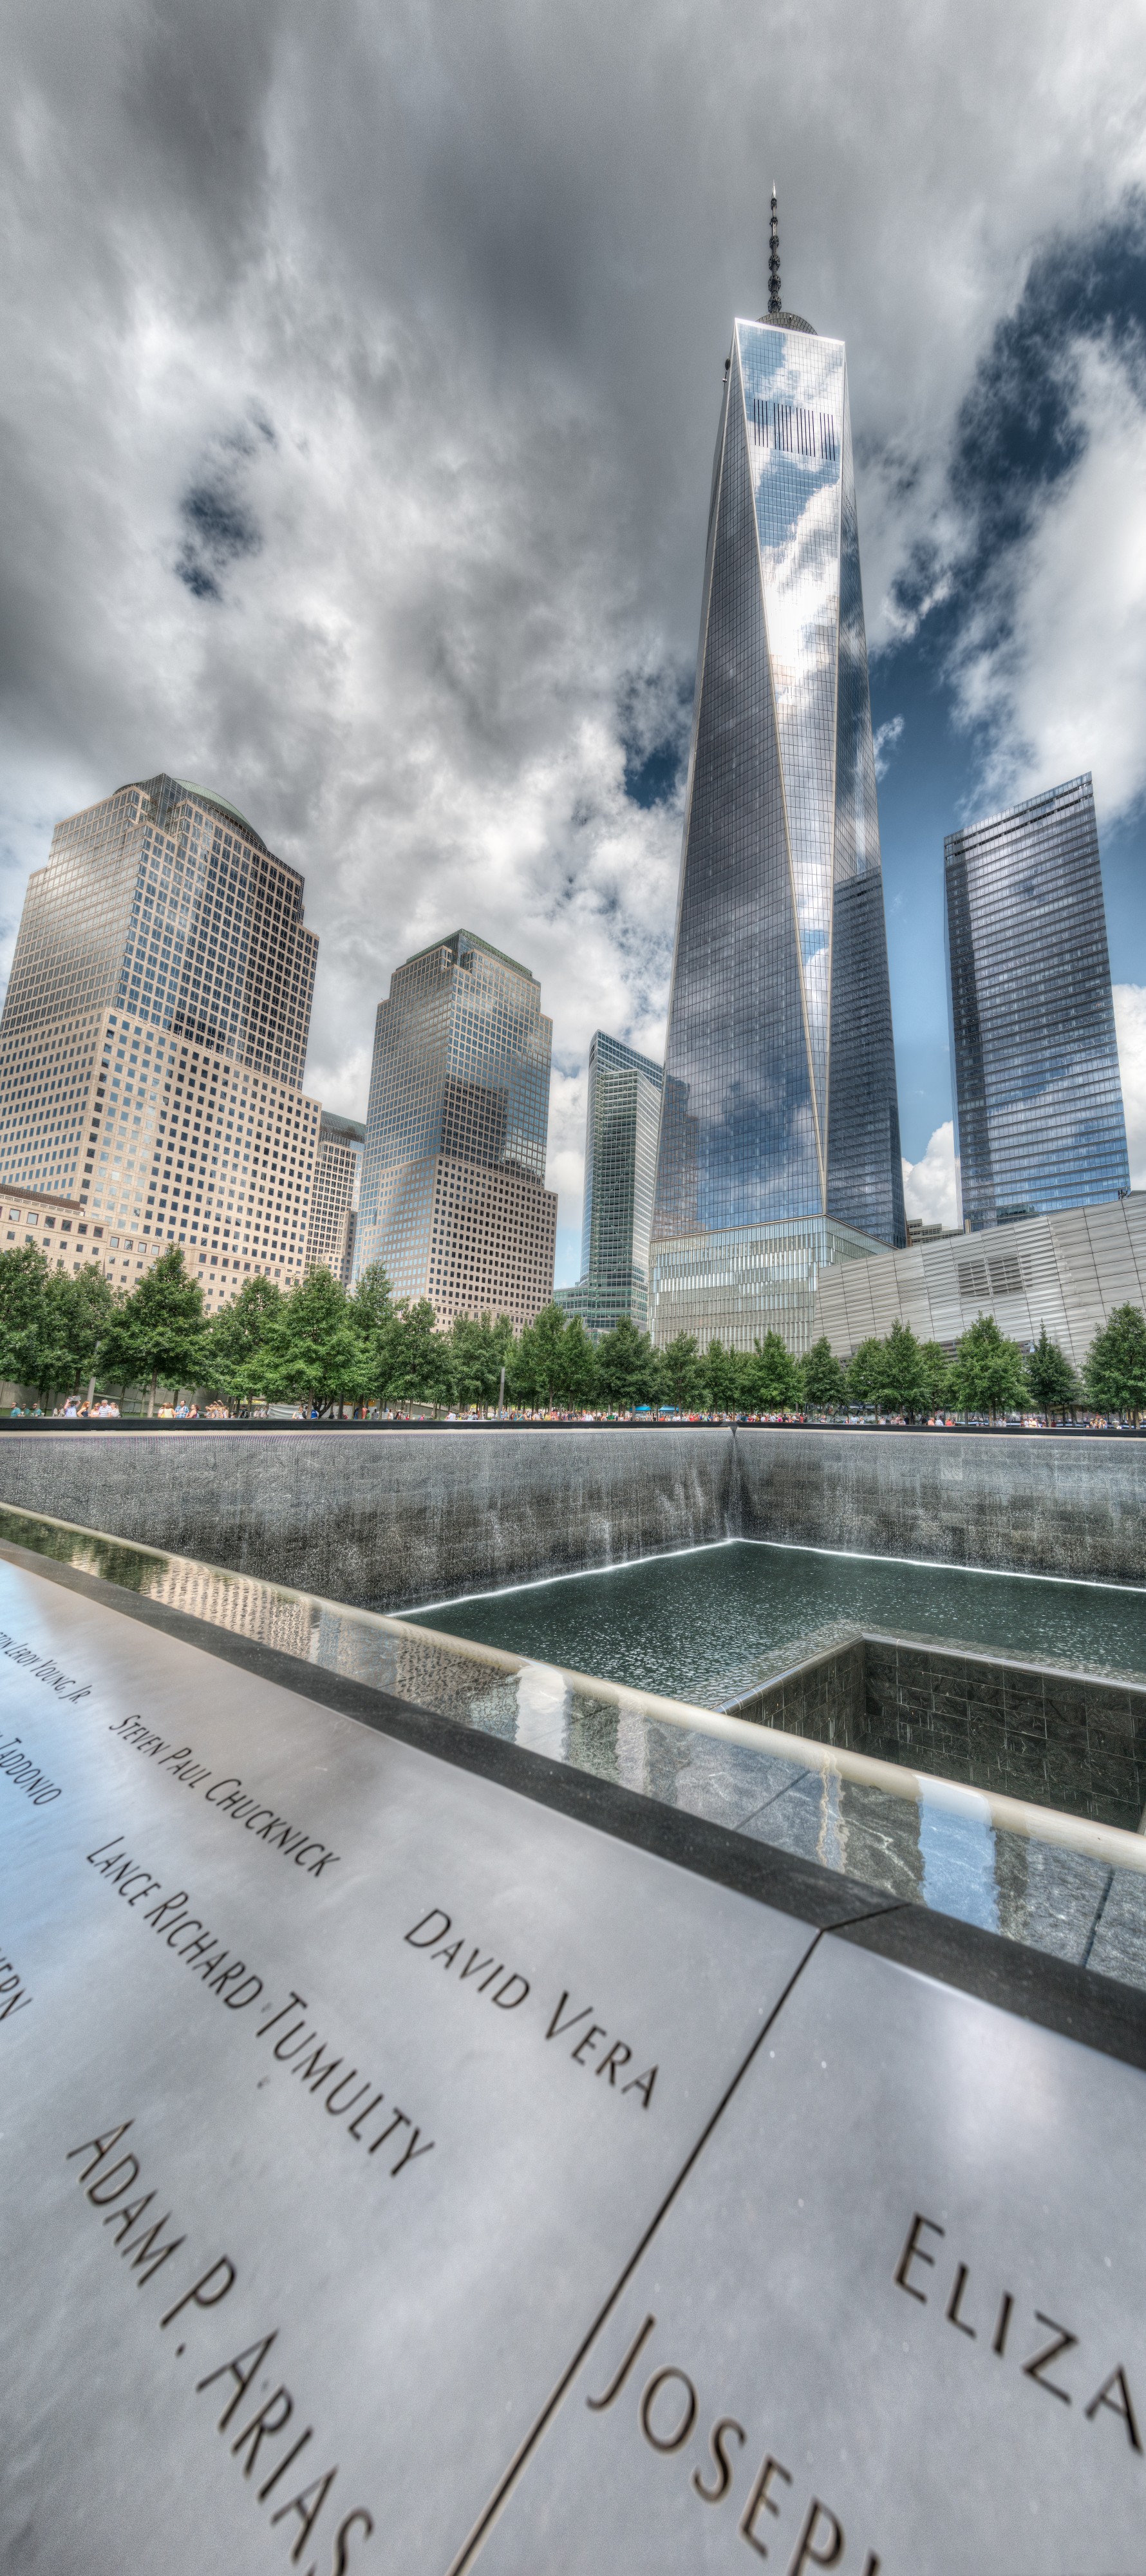 9-11 Memorial - New York, NY, USA - August 19, 2015 01